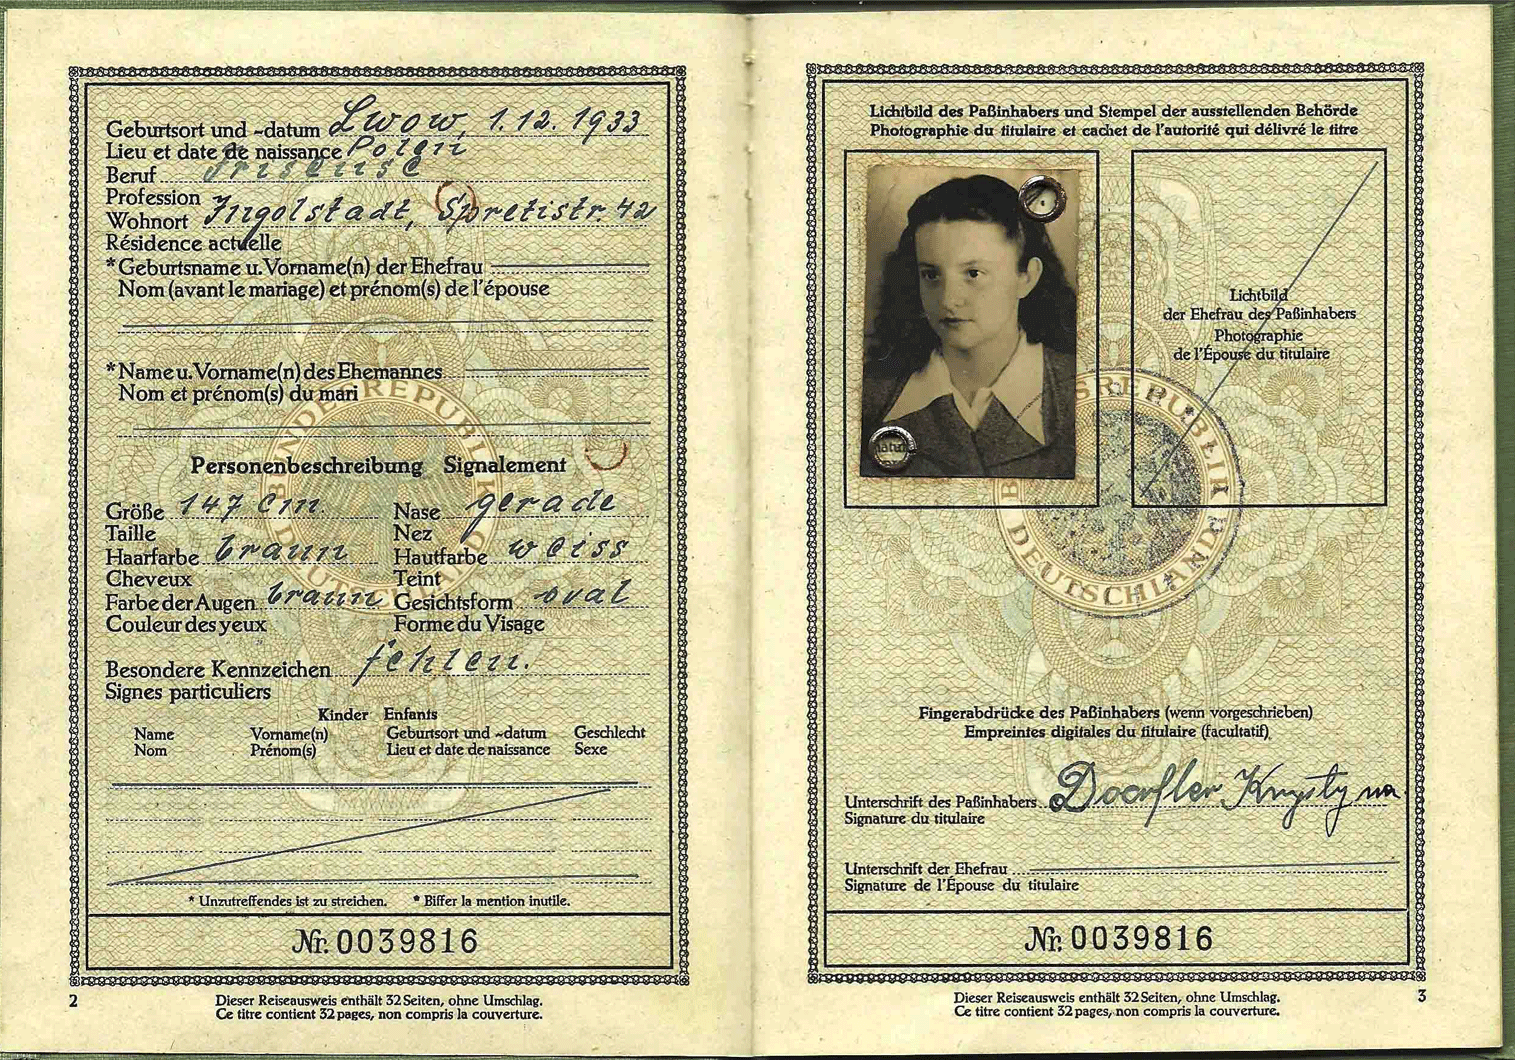 1952 Refugee travel document